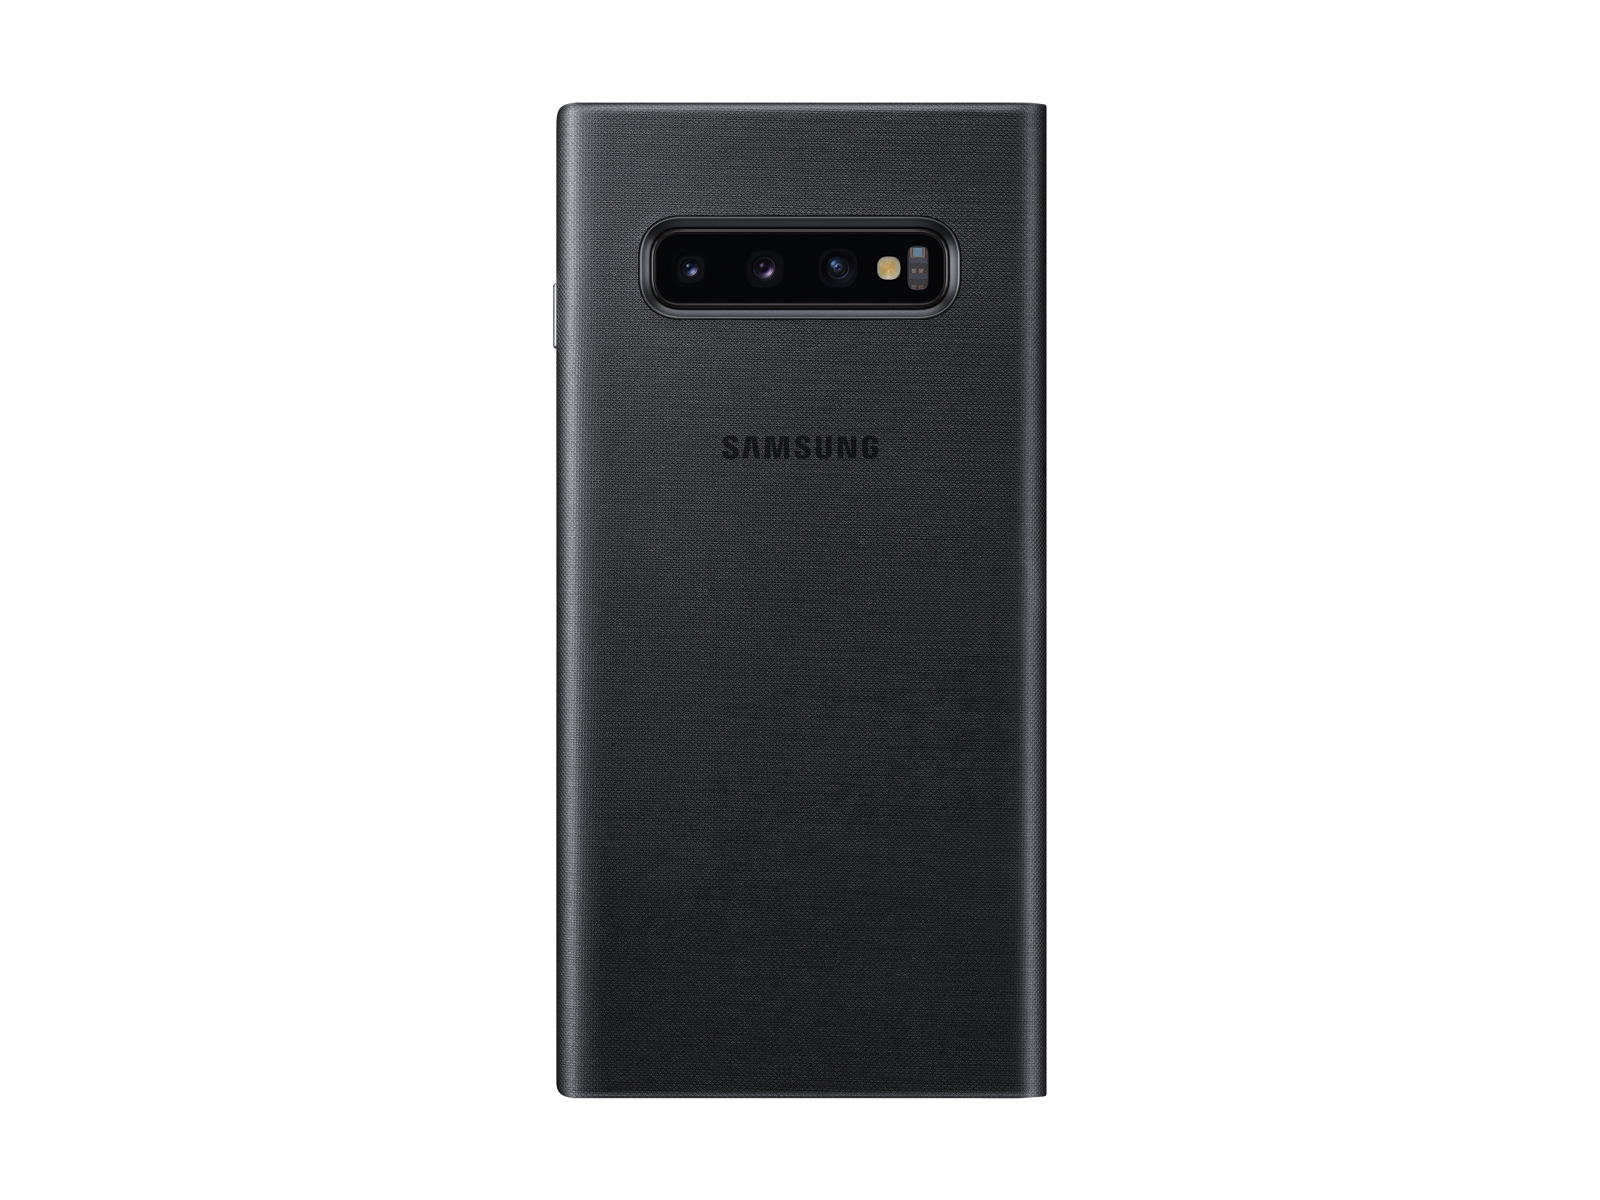 Luftfart elasticitet snap Galaxy S10 LED Wallet Cover, Black Mobile Accessories - EF-NG973PBEGUS |  Samsung US